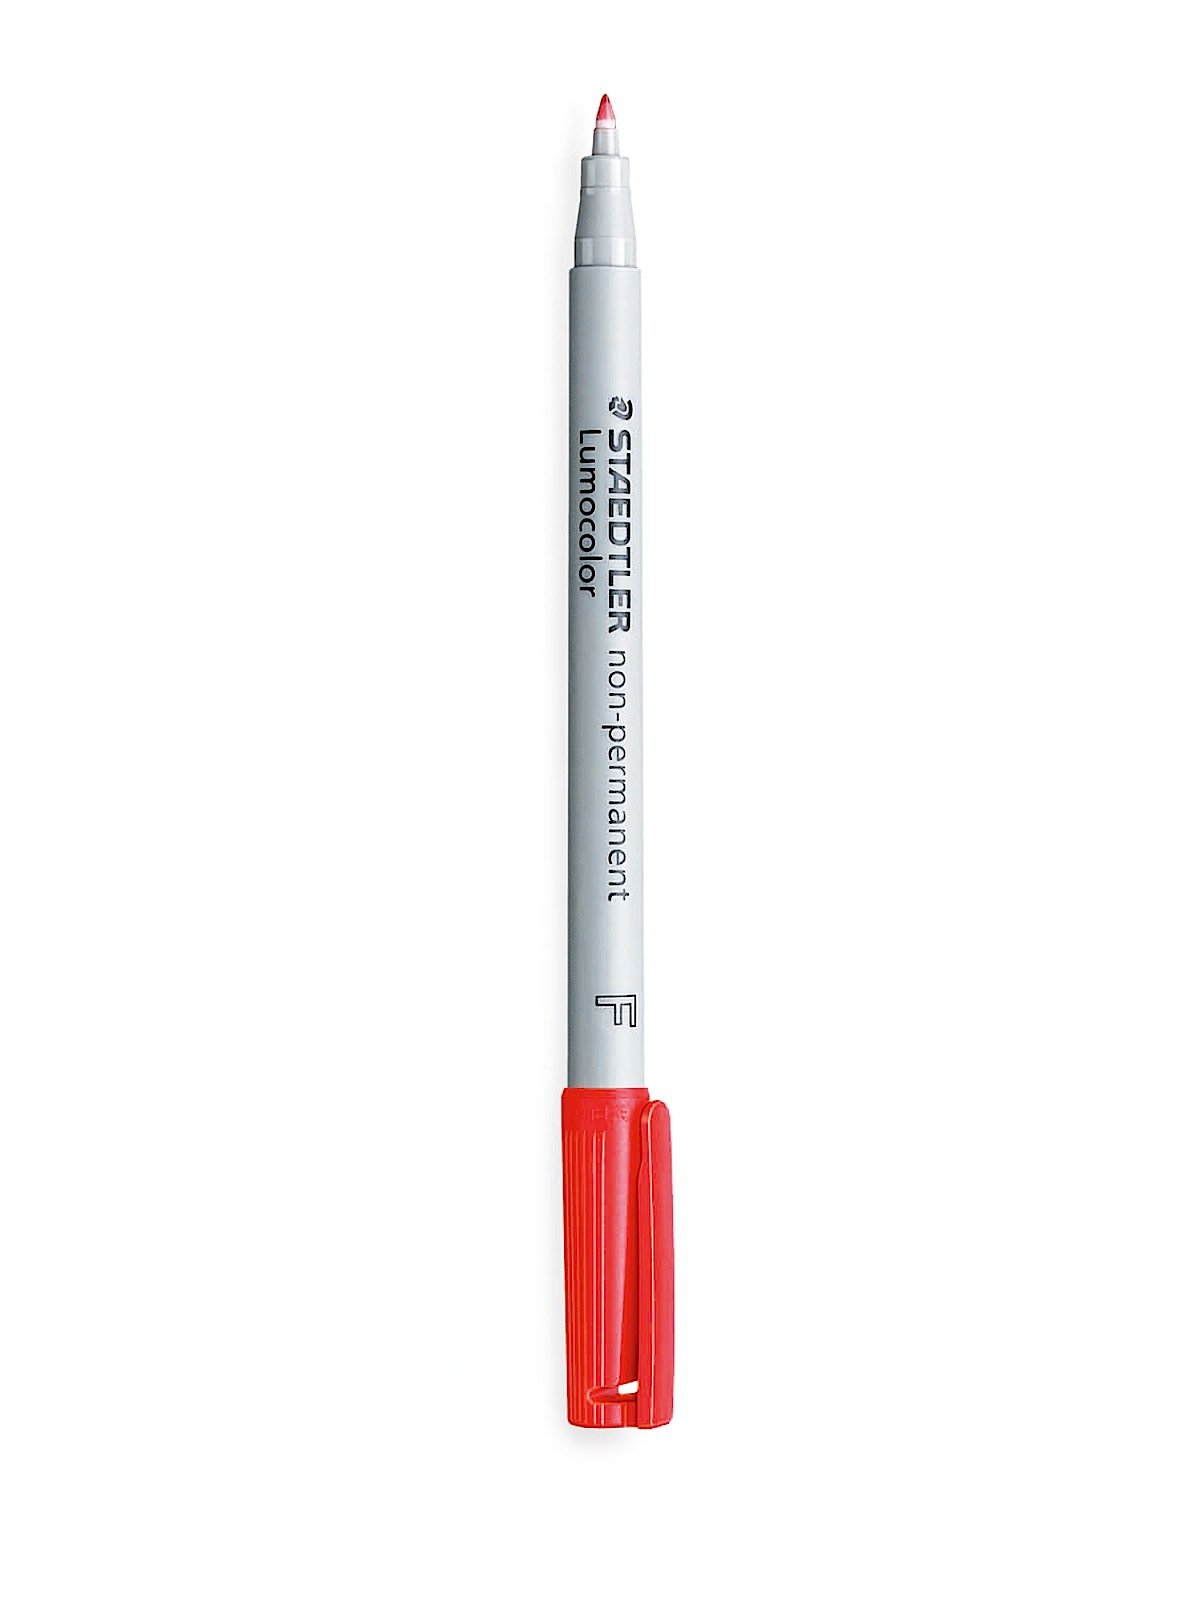 Staedtler Lumocolor Permanent Superfine Mapping Pens